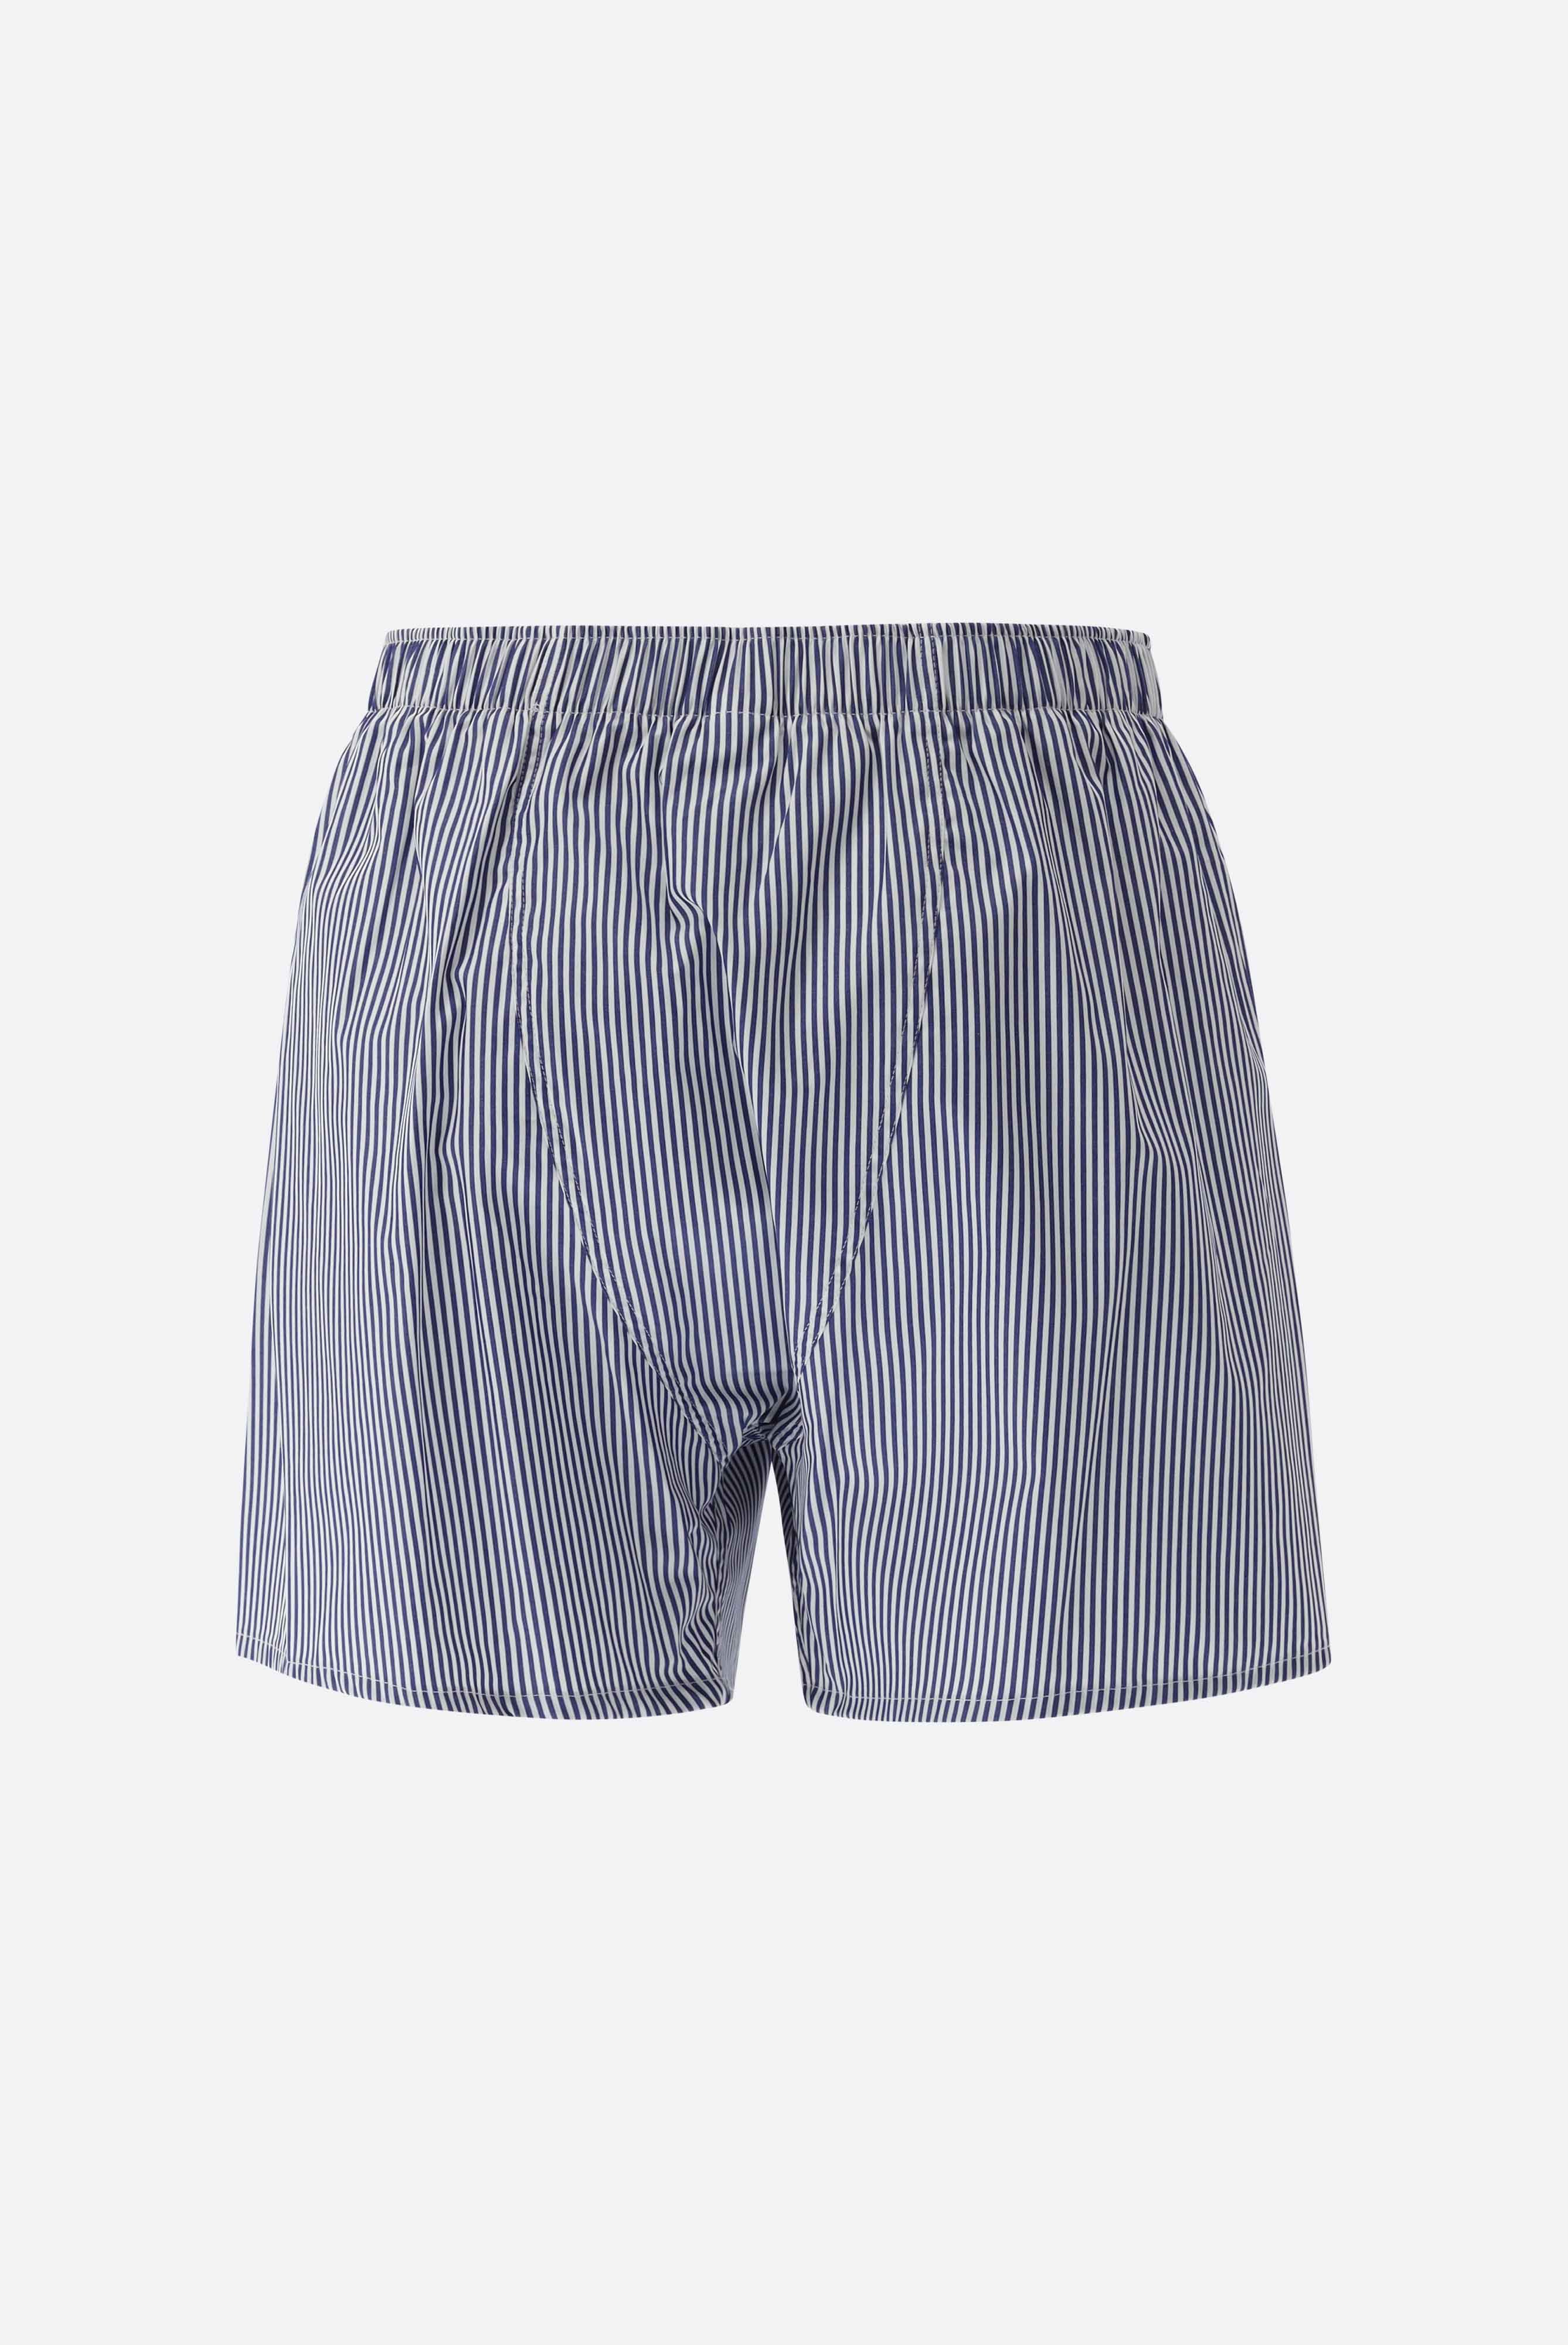 Underwear+Striped Two-Ply Poplin Boxer Shorts+91.1100..151053.780.46